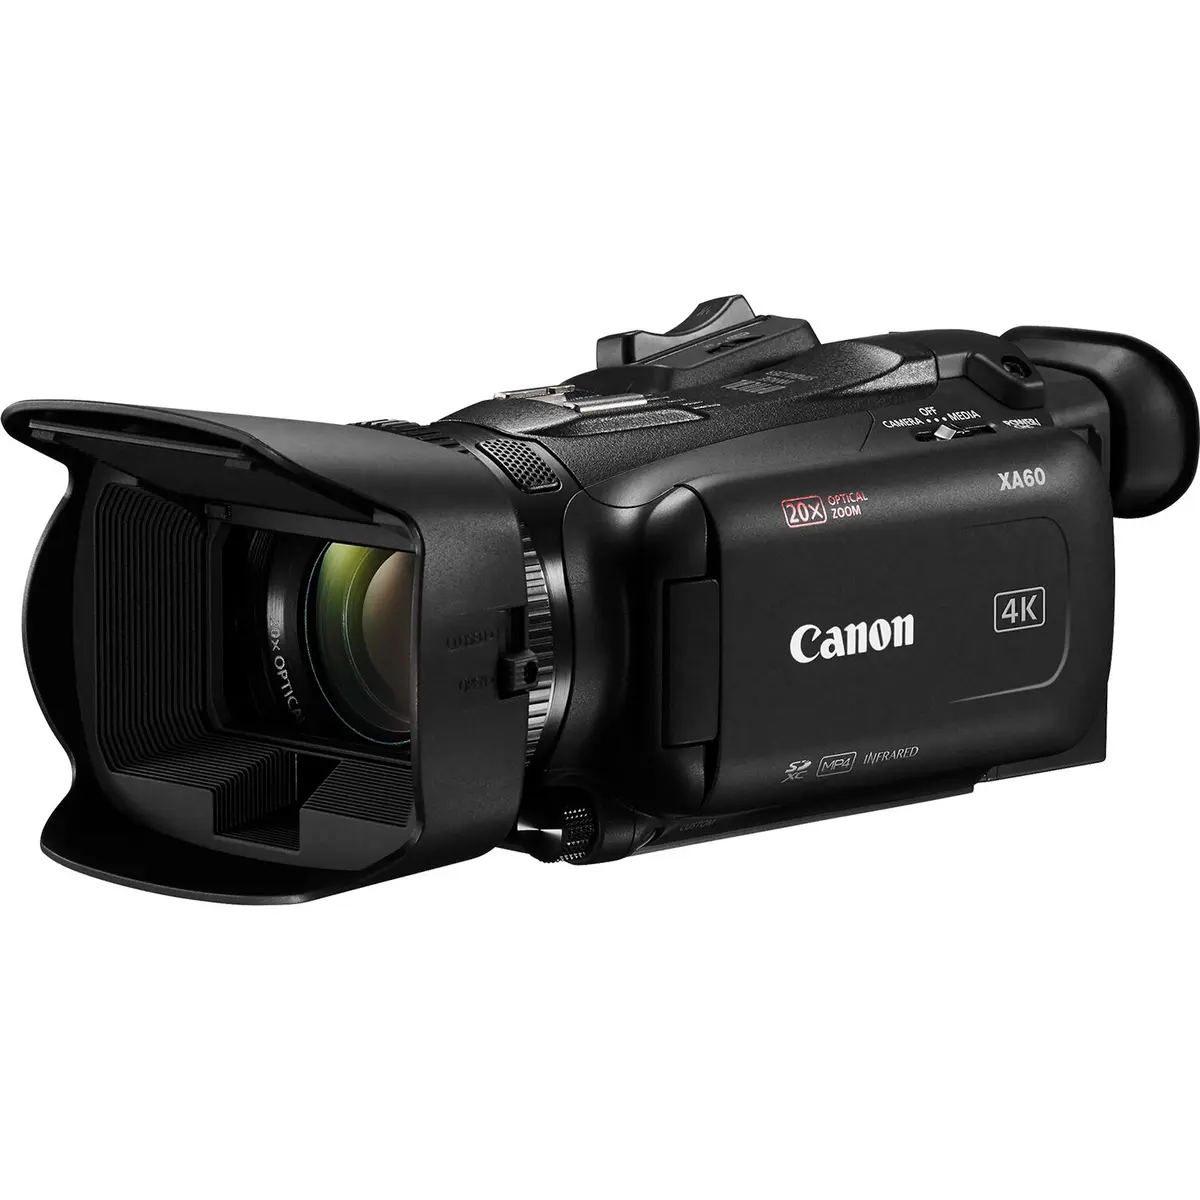 1. Canon XA60 Professional UHD 4K Camcorder